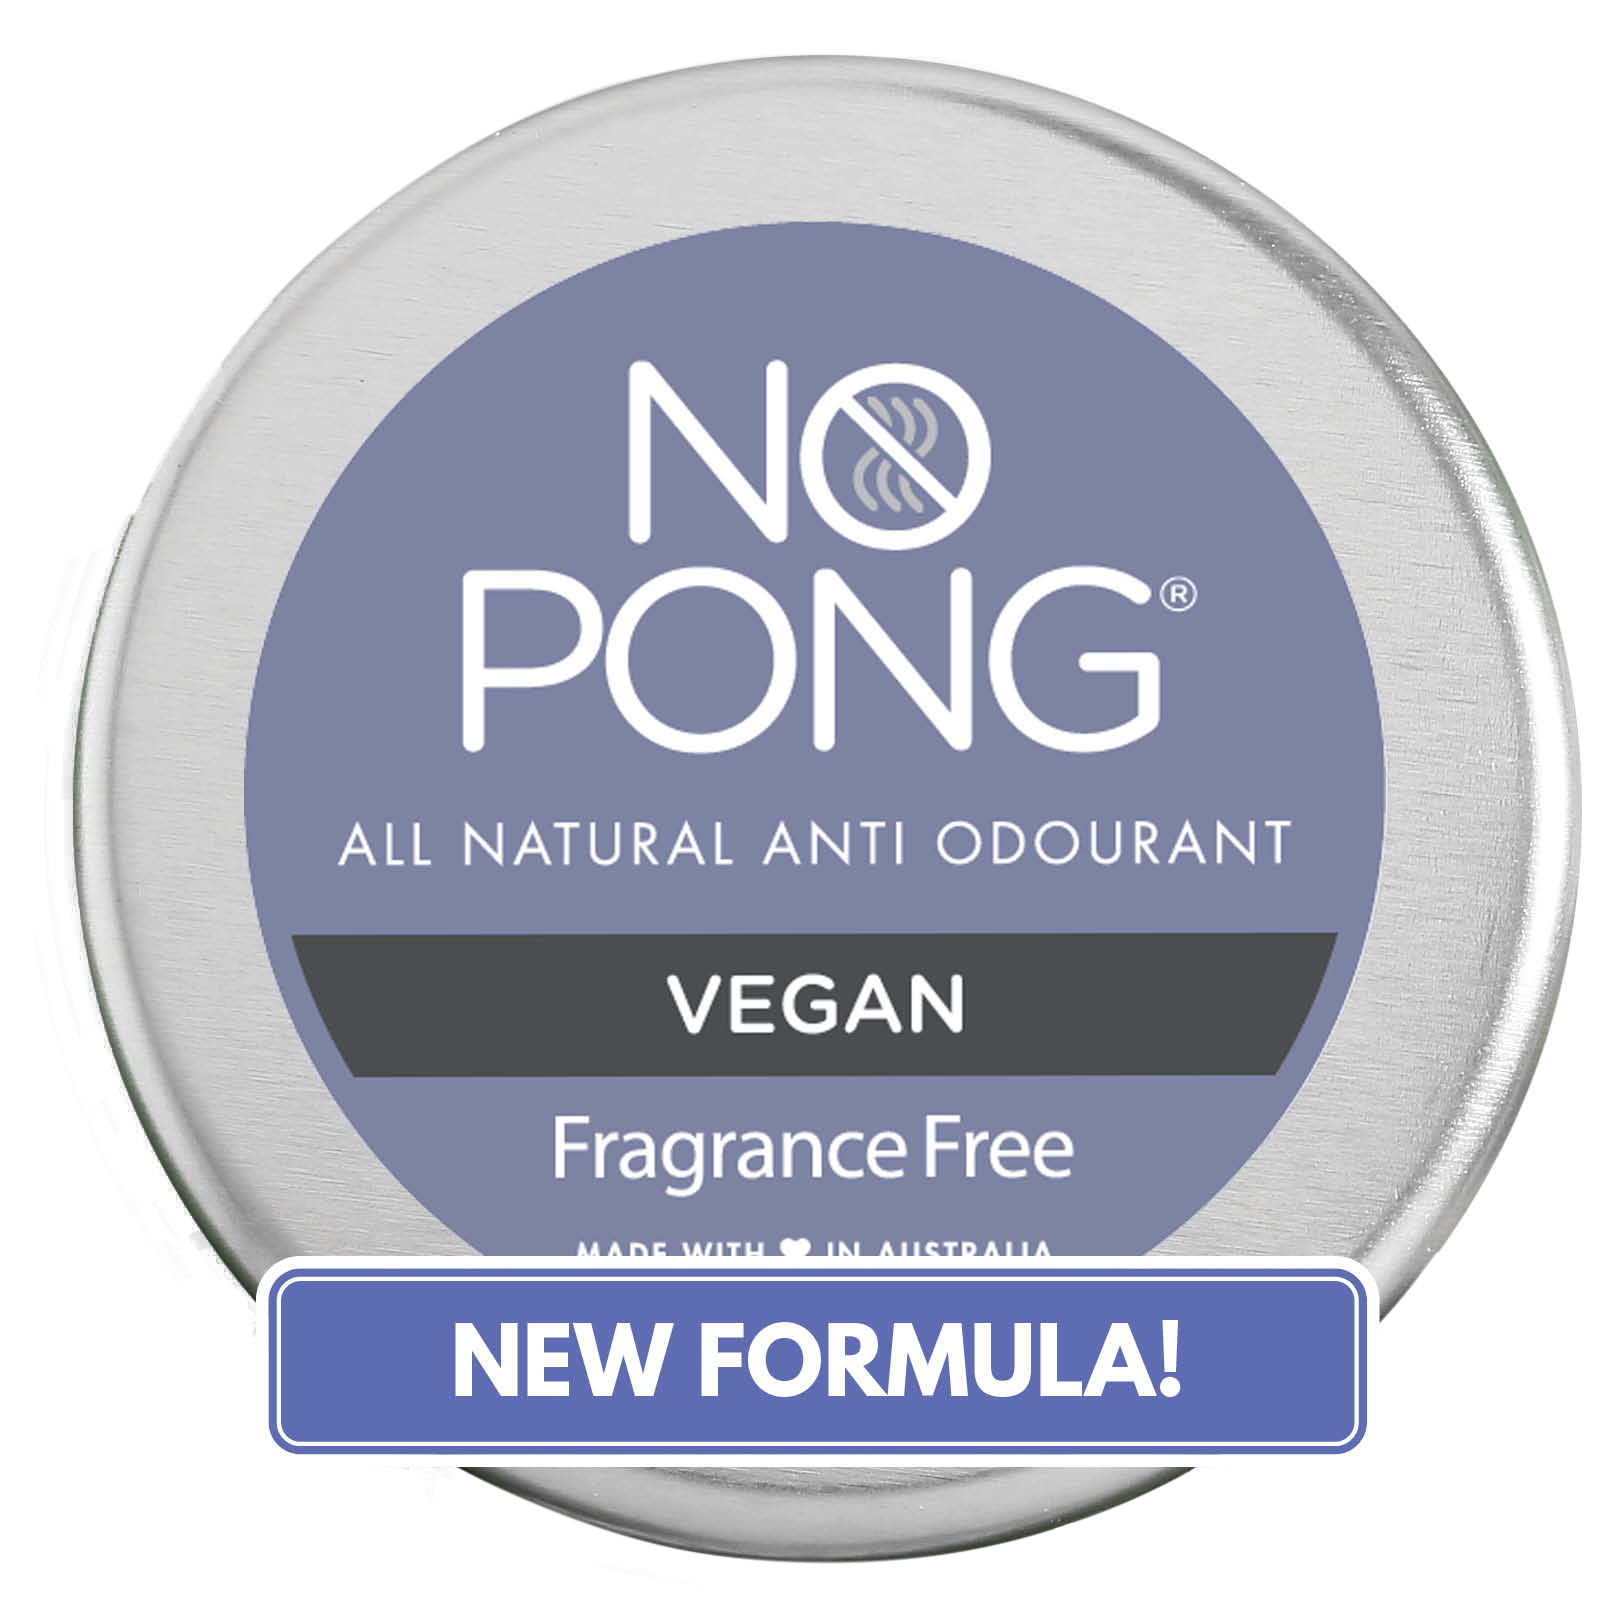 05. No Pong Fragrance Free Vegan.png